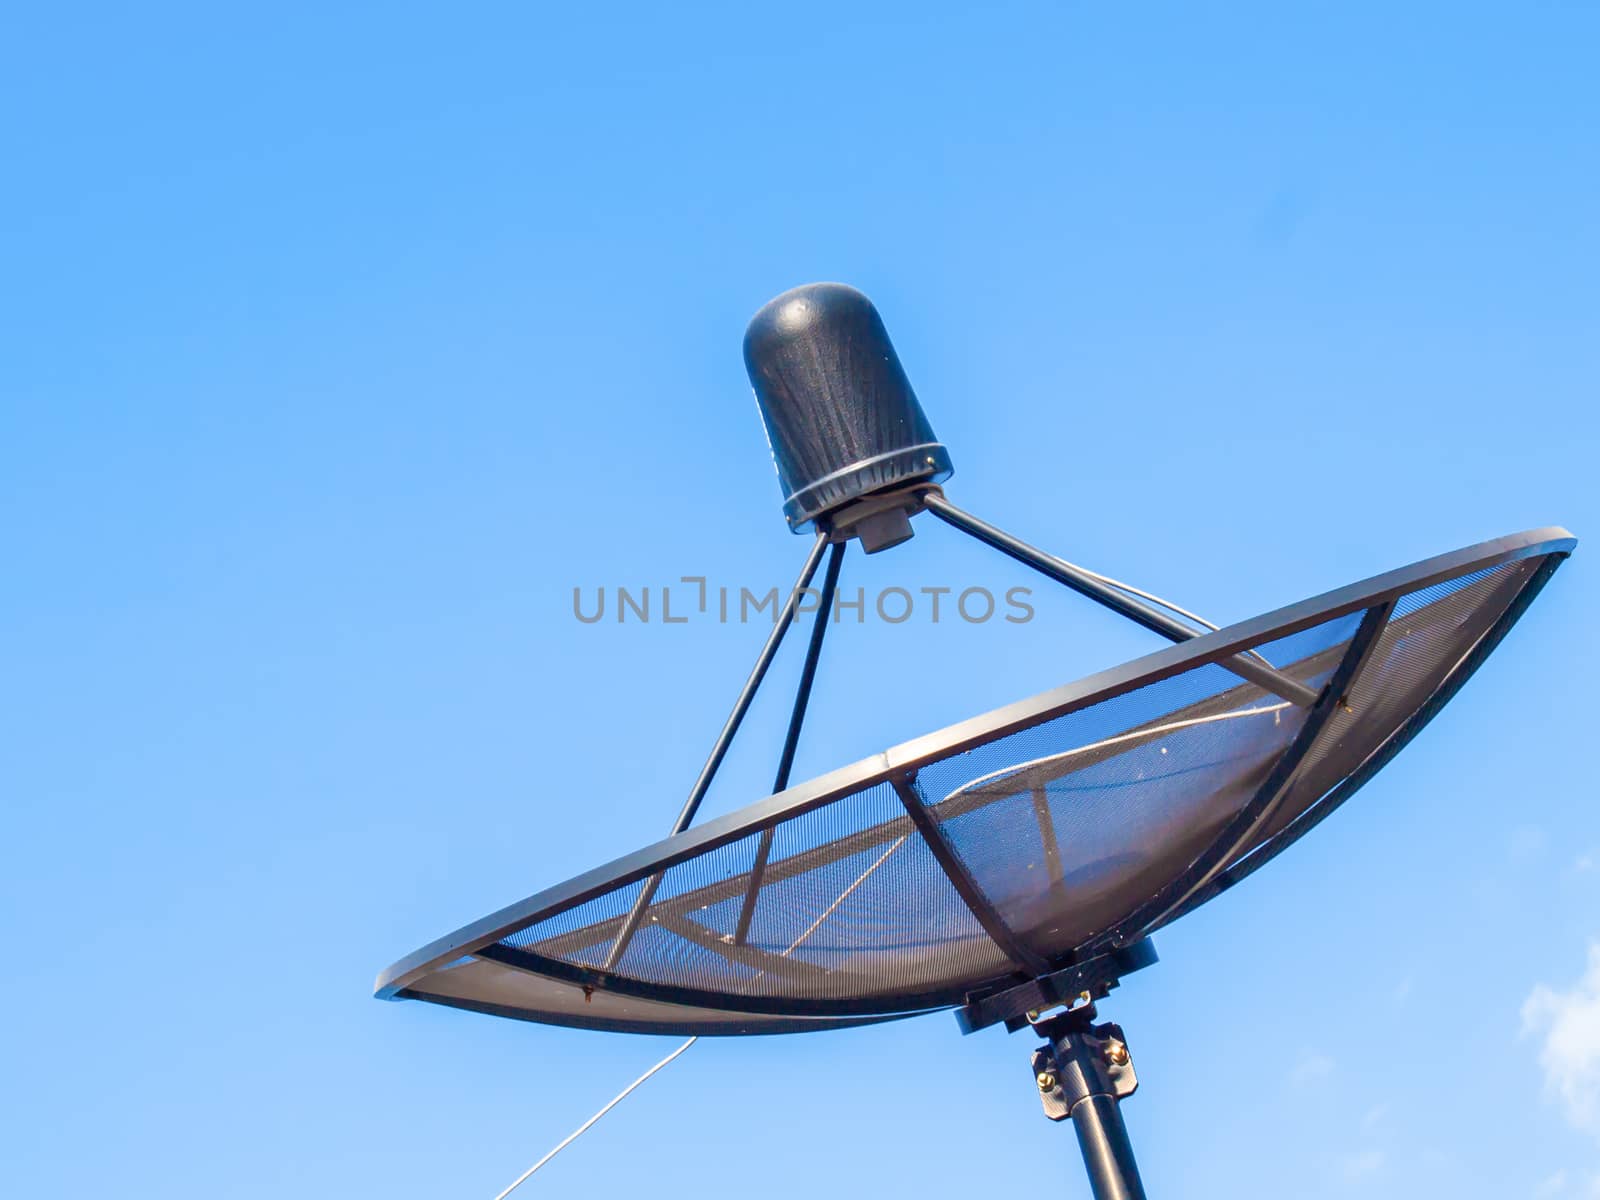 Satellite dish in blue sky by wmitrmatr